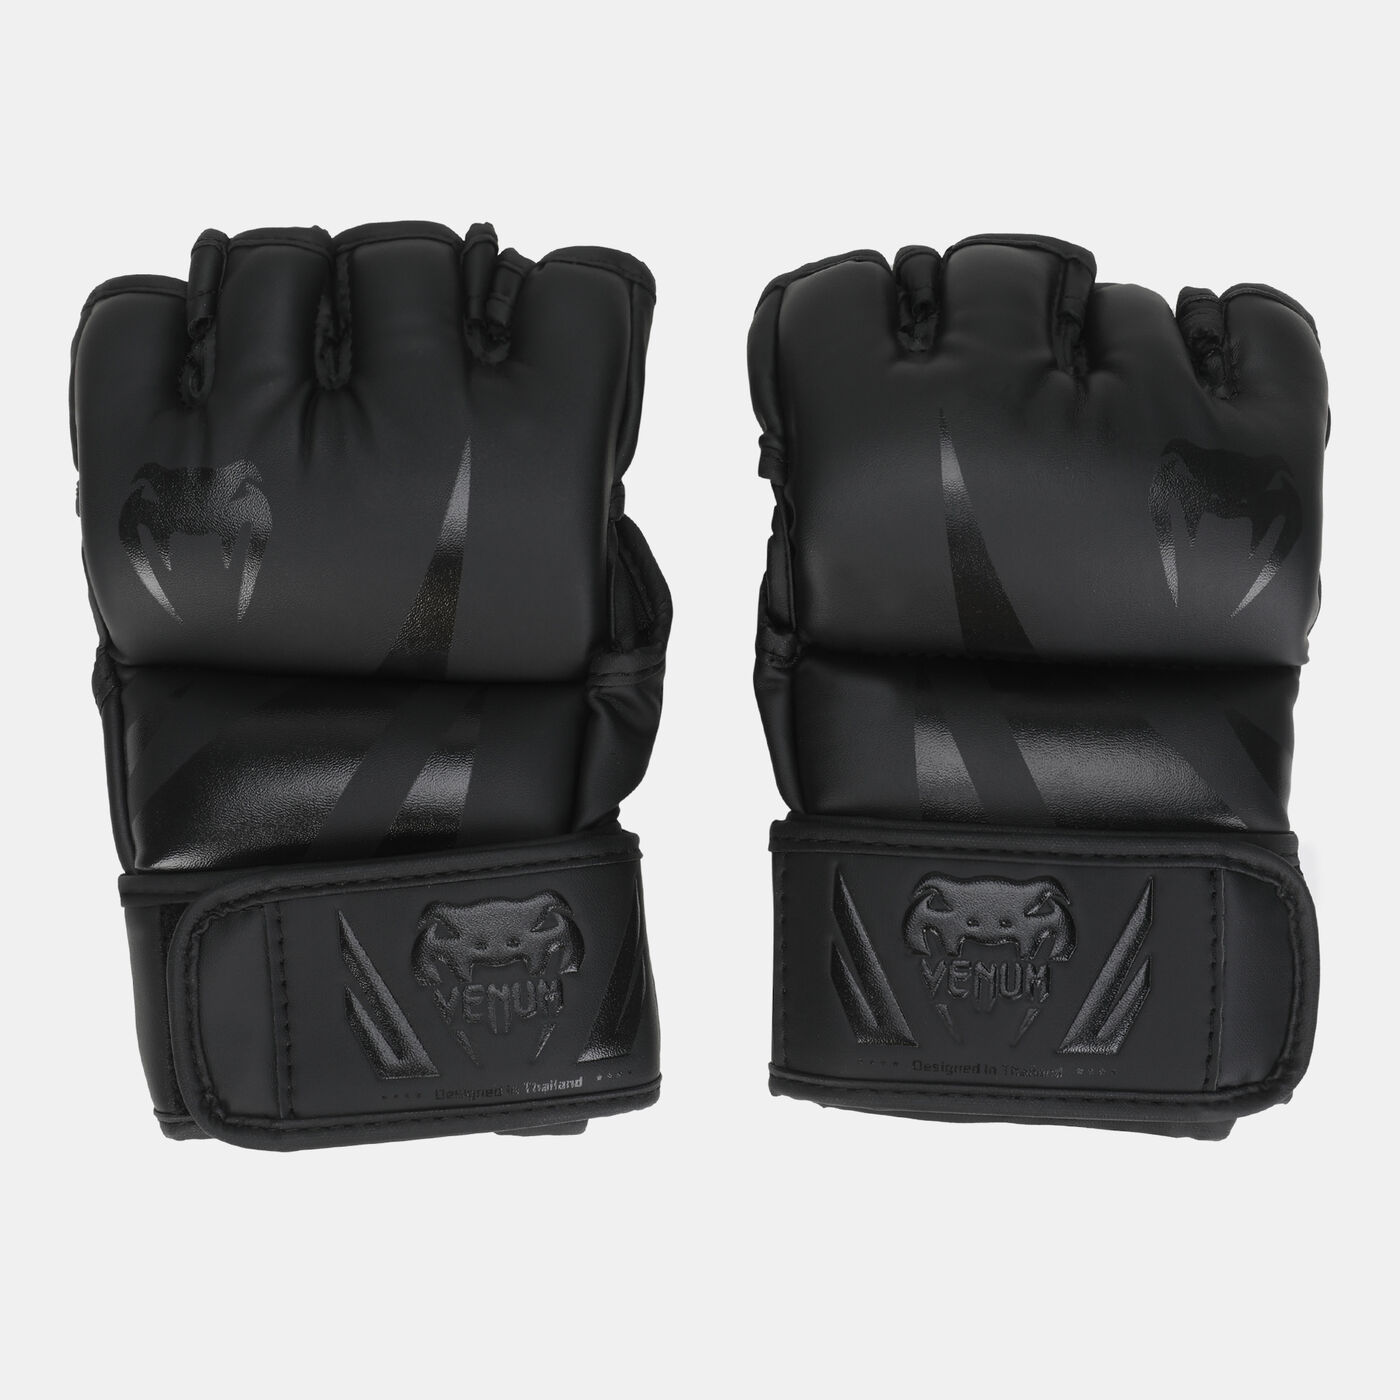 Challenger MMA Gloves